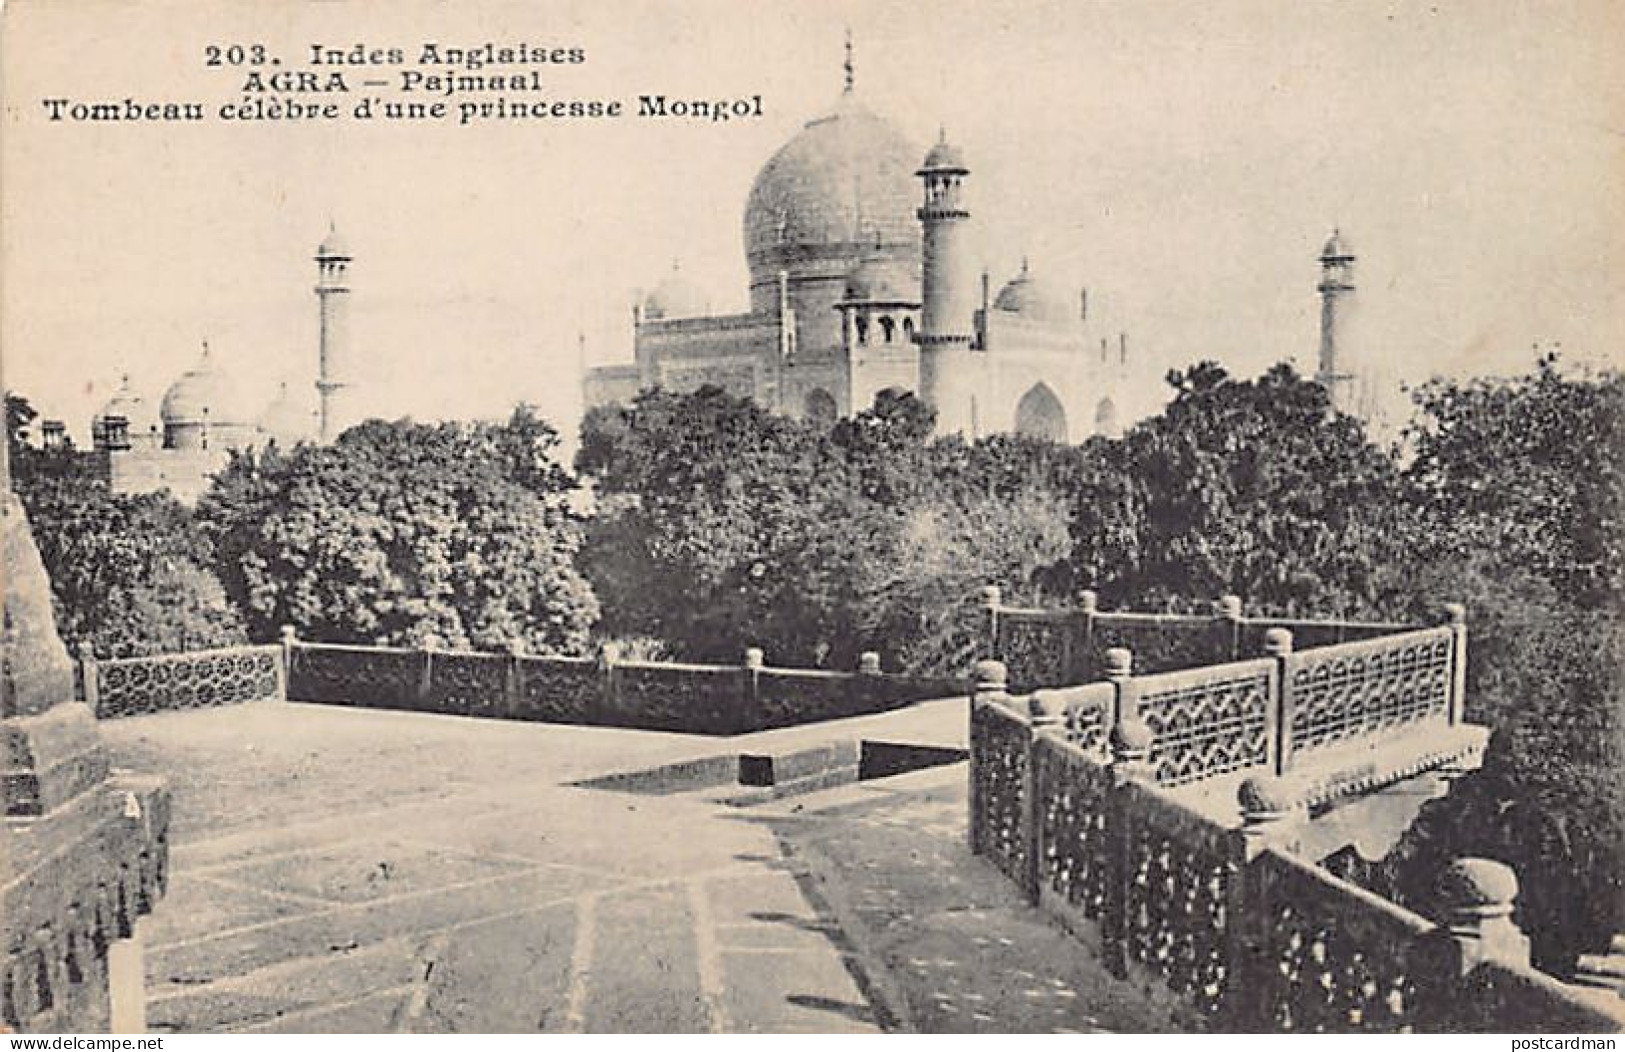 India - AGRA - The Taj Mahal - Publ. Messageries Maritimes 203 - Inde